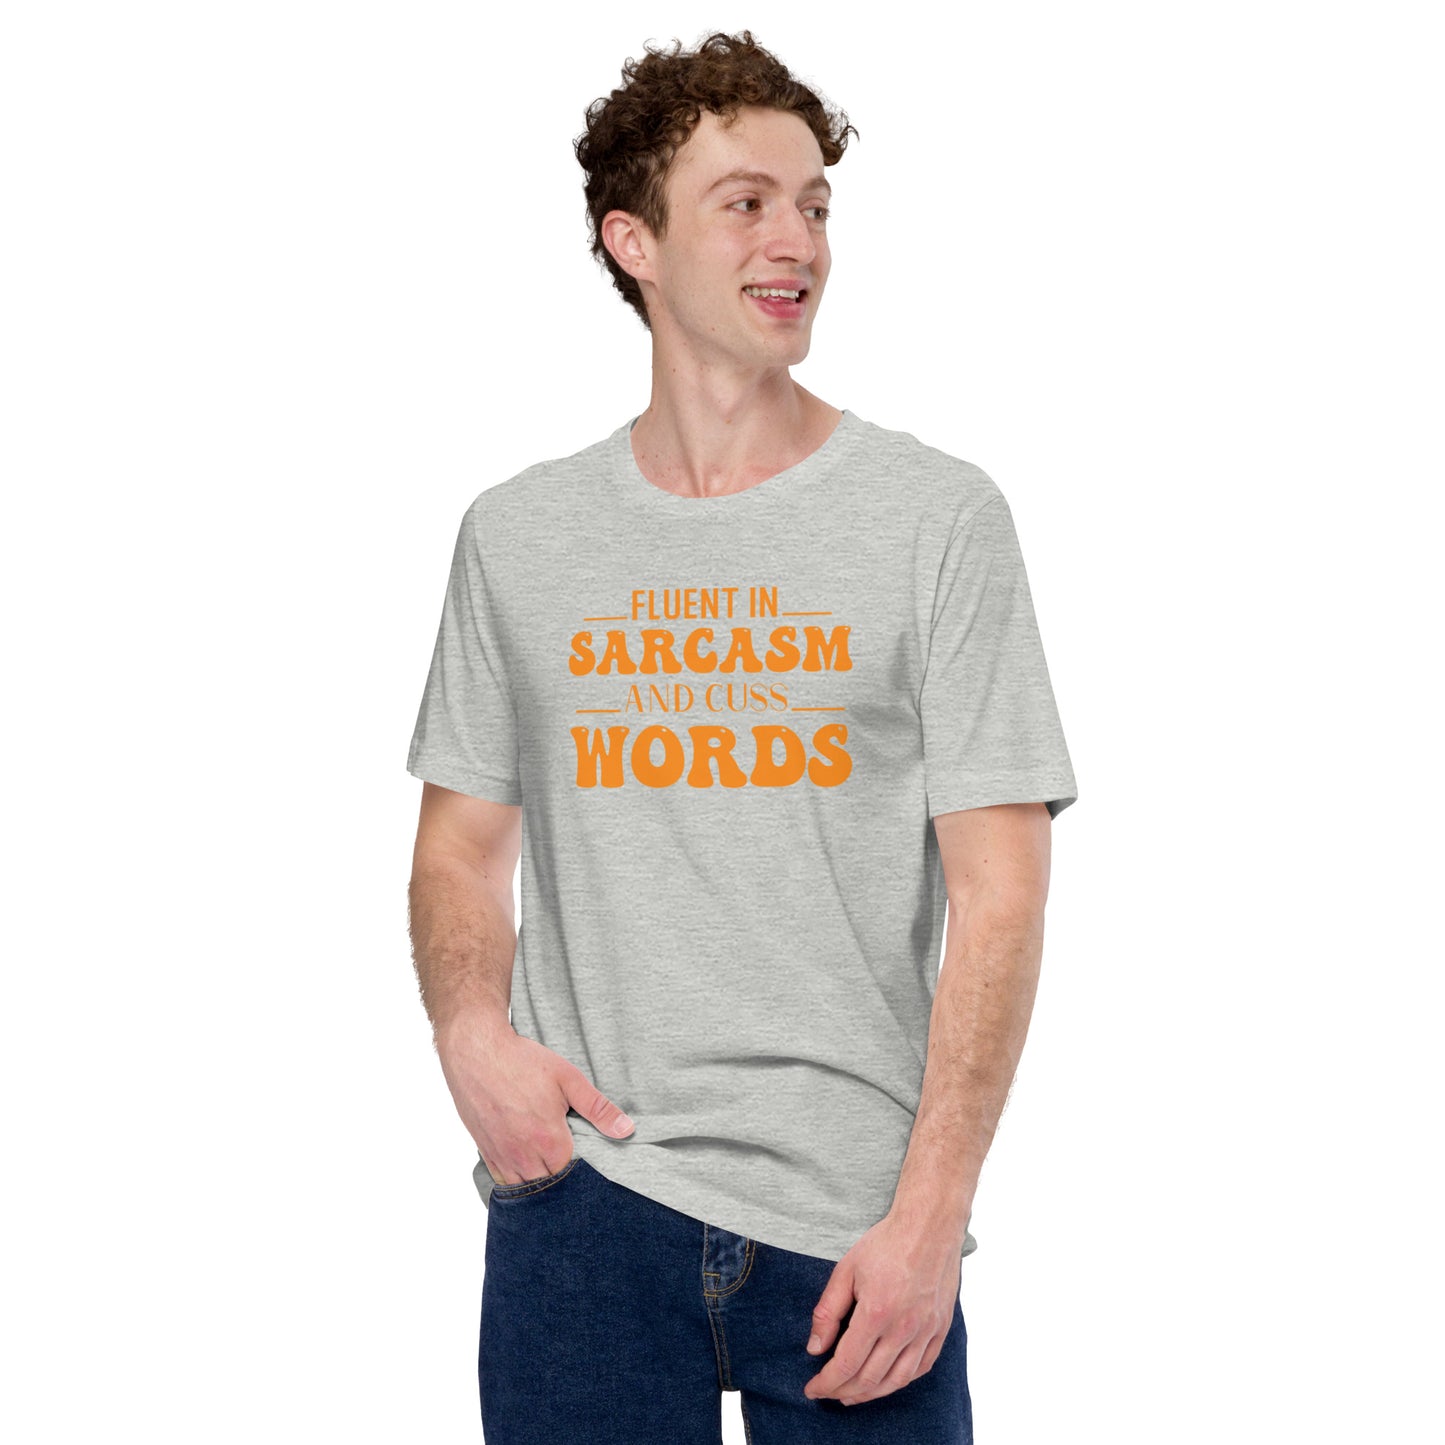 Fluent in Sarcasm and Cuss Words Unisex t-shirt